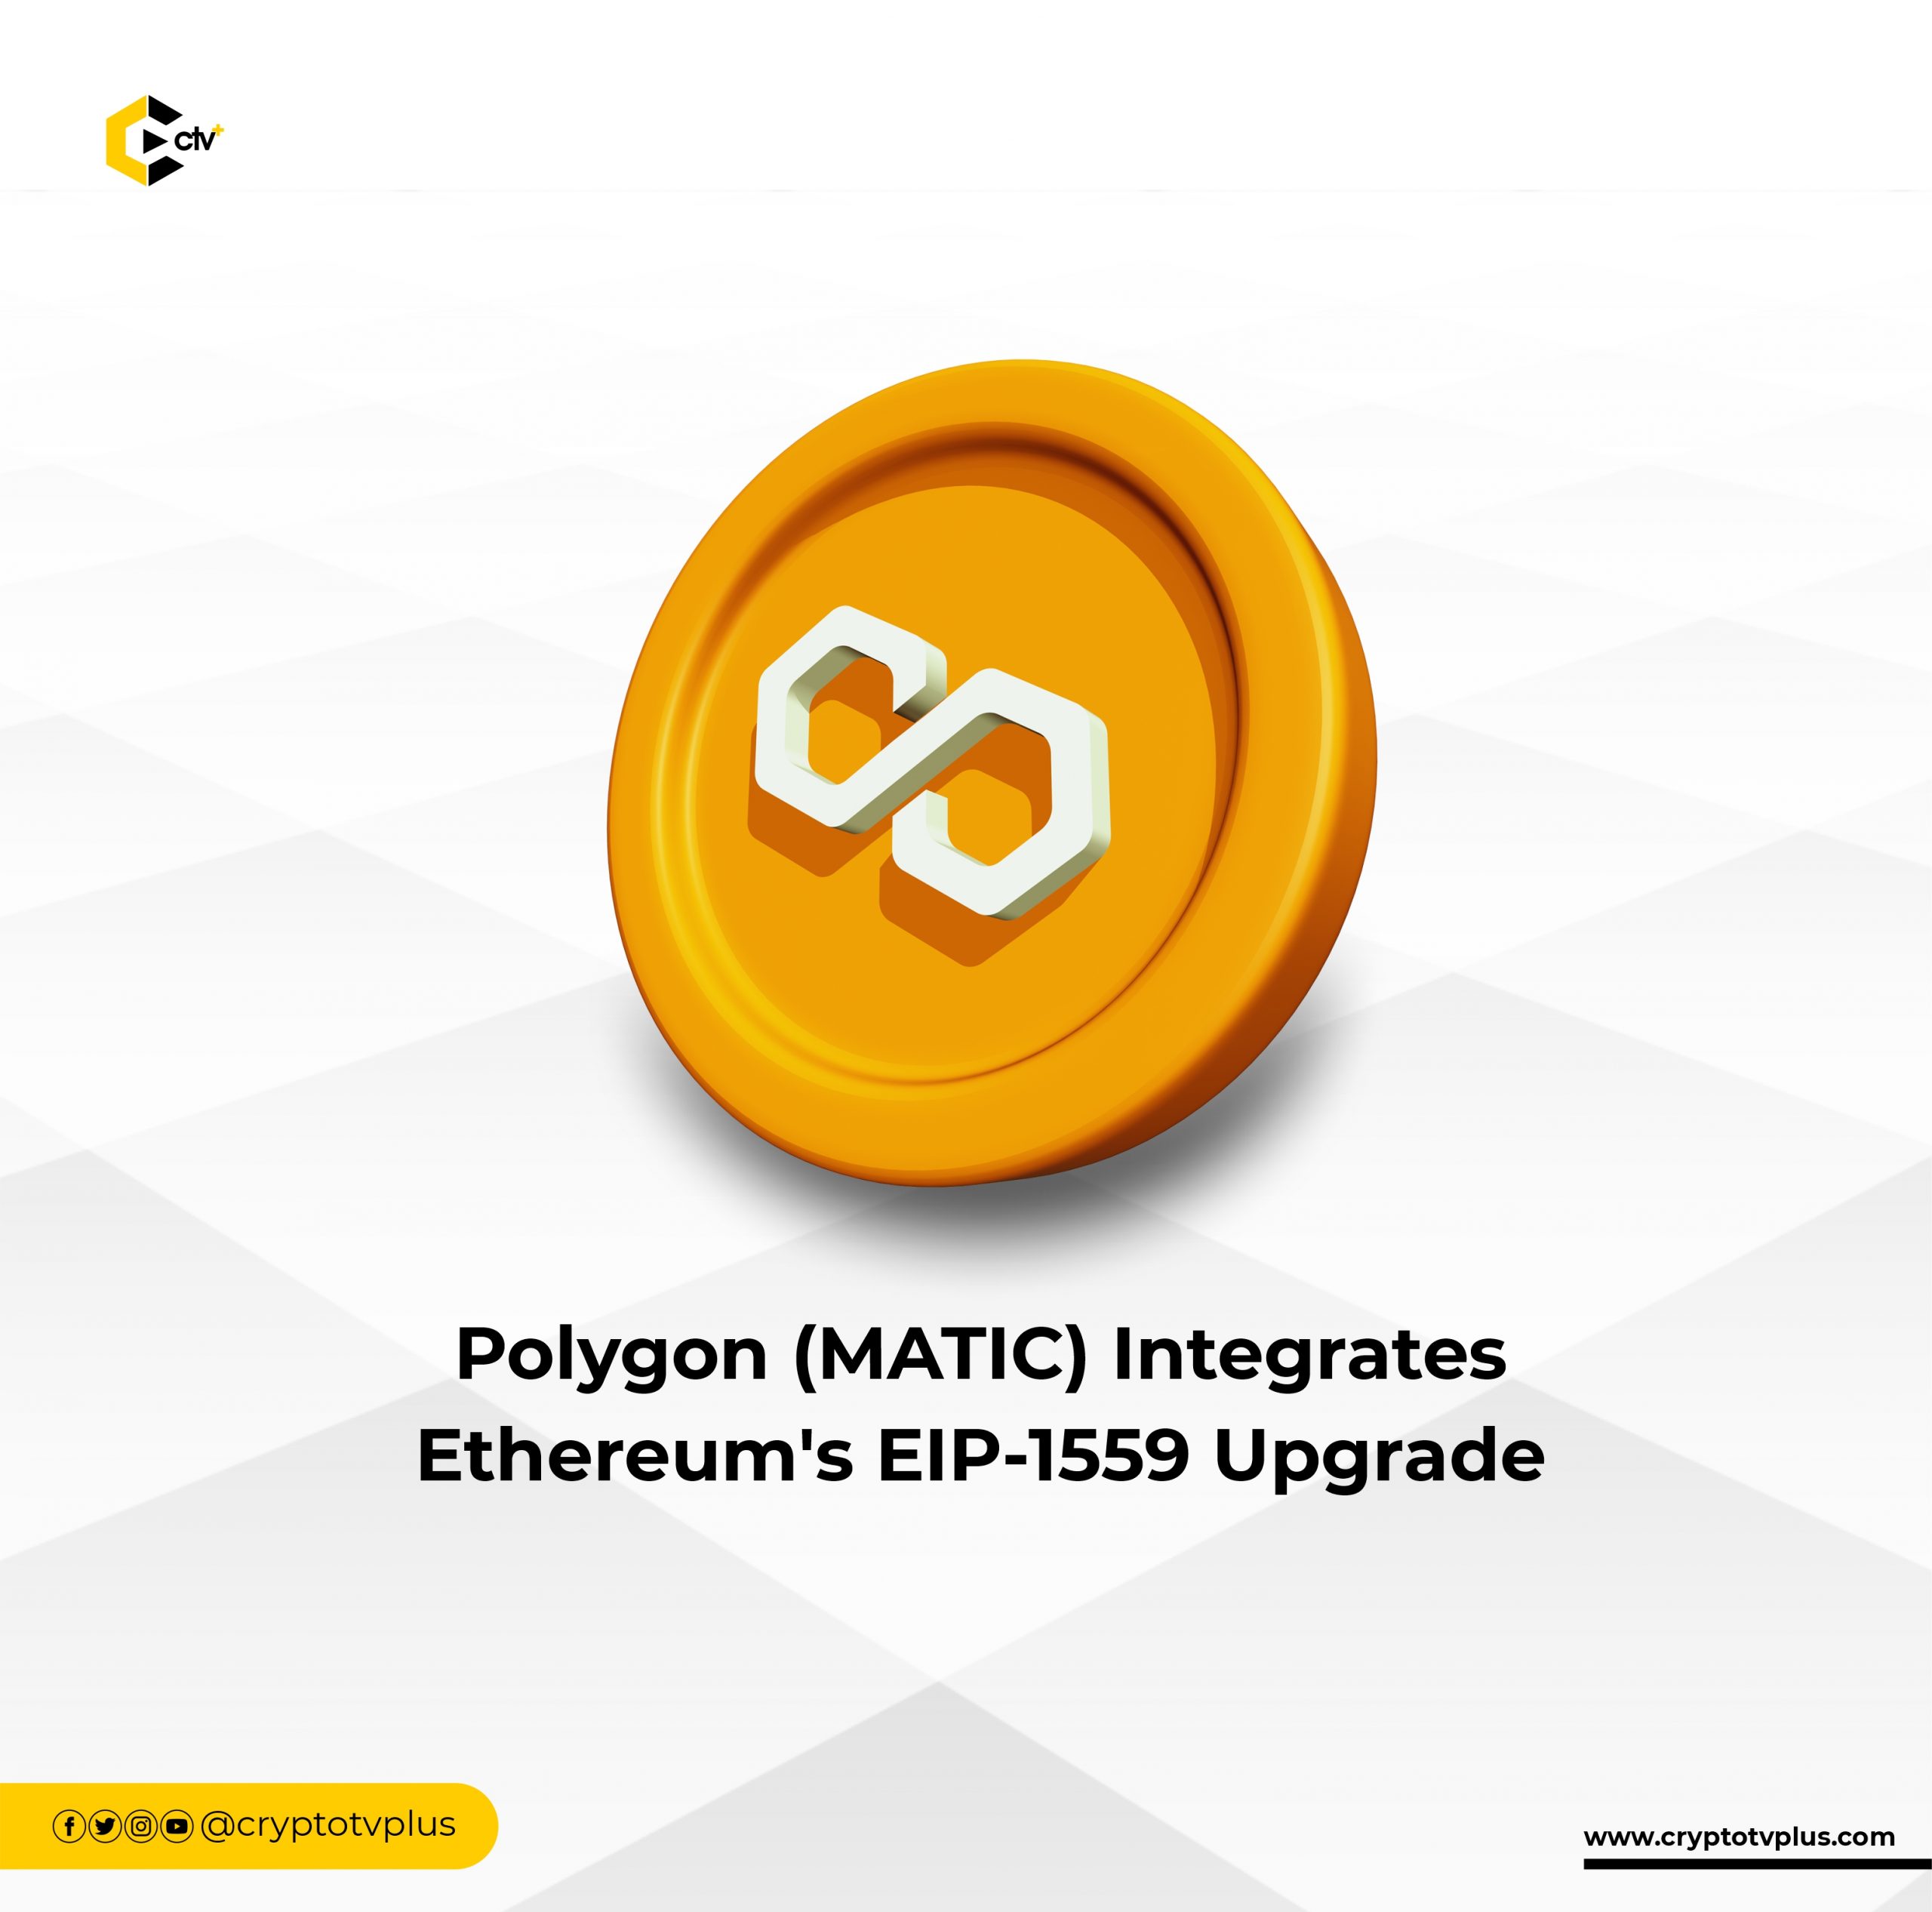 Polygon (MATIC) Integrates Ethereum's EIP-1559 Upgrade 

